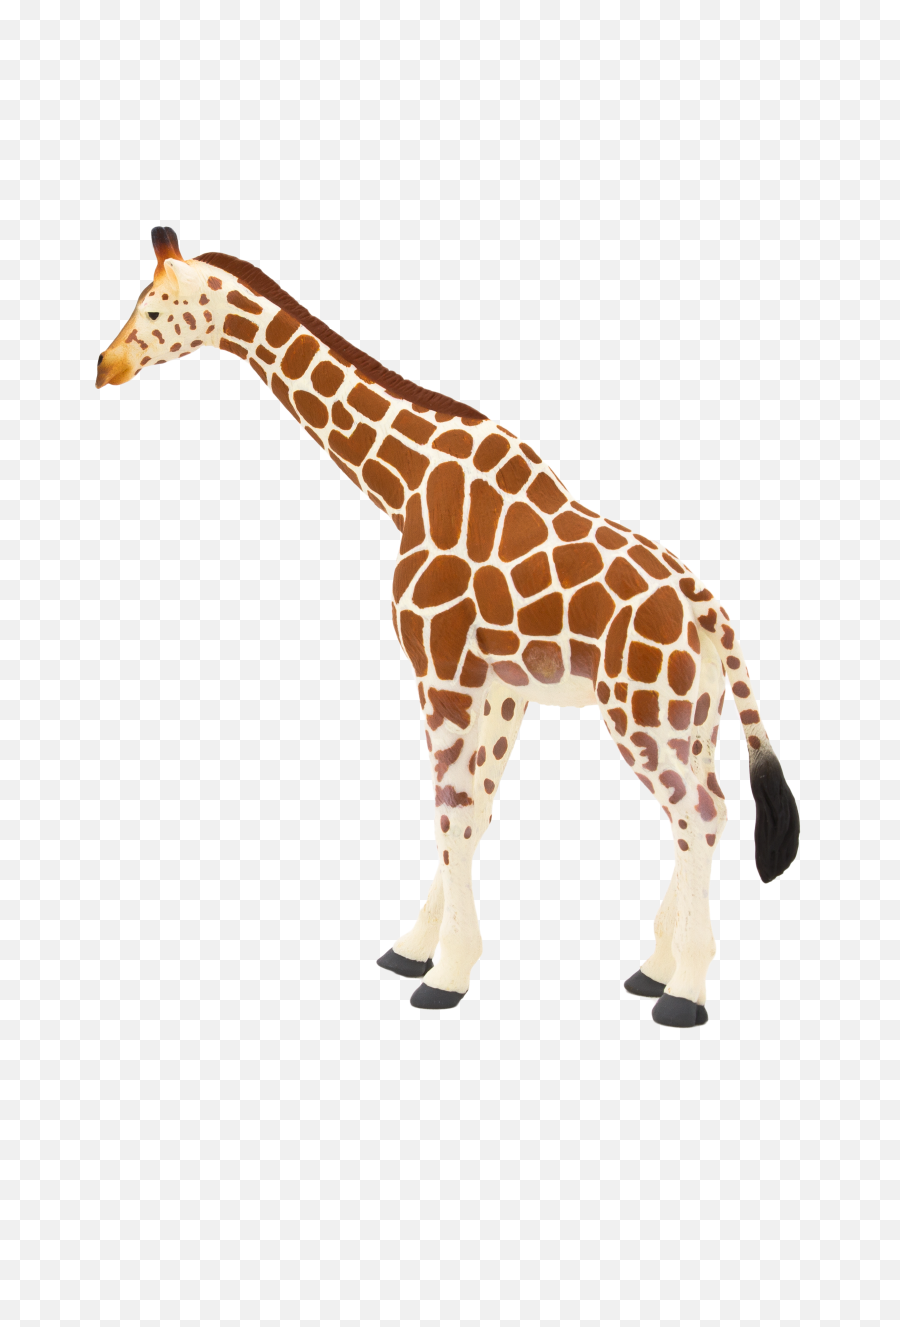 Download Mojo Fun Giraffe Figure Png Image With No - 387006 Mojo,Giraffe Transparent Background